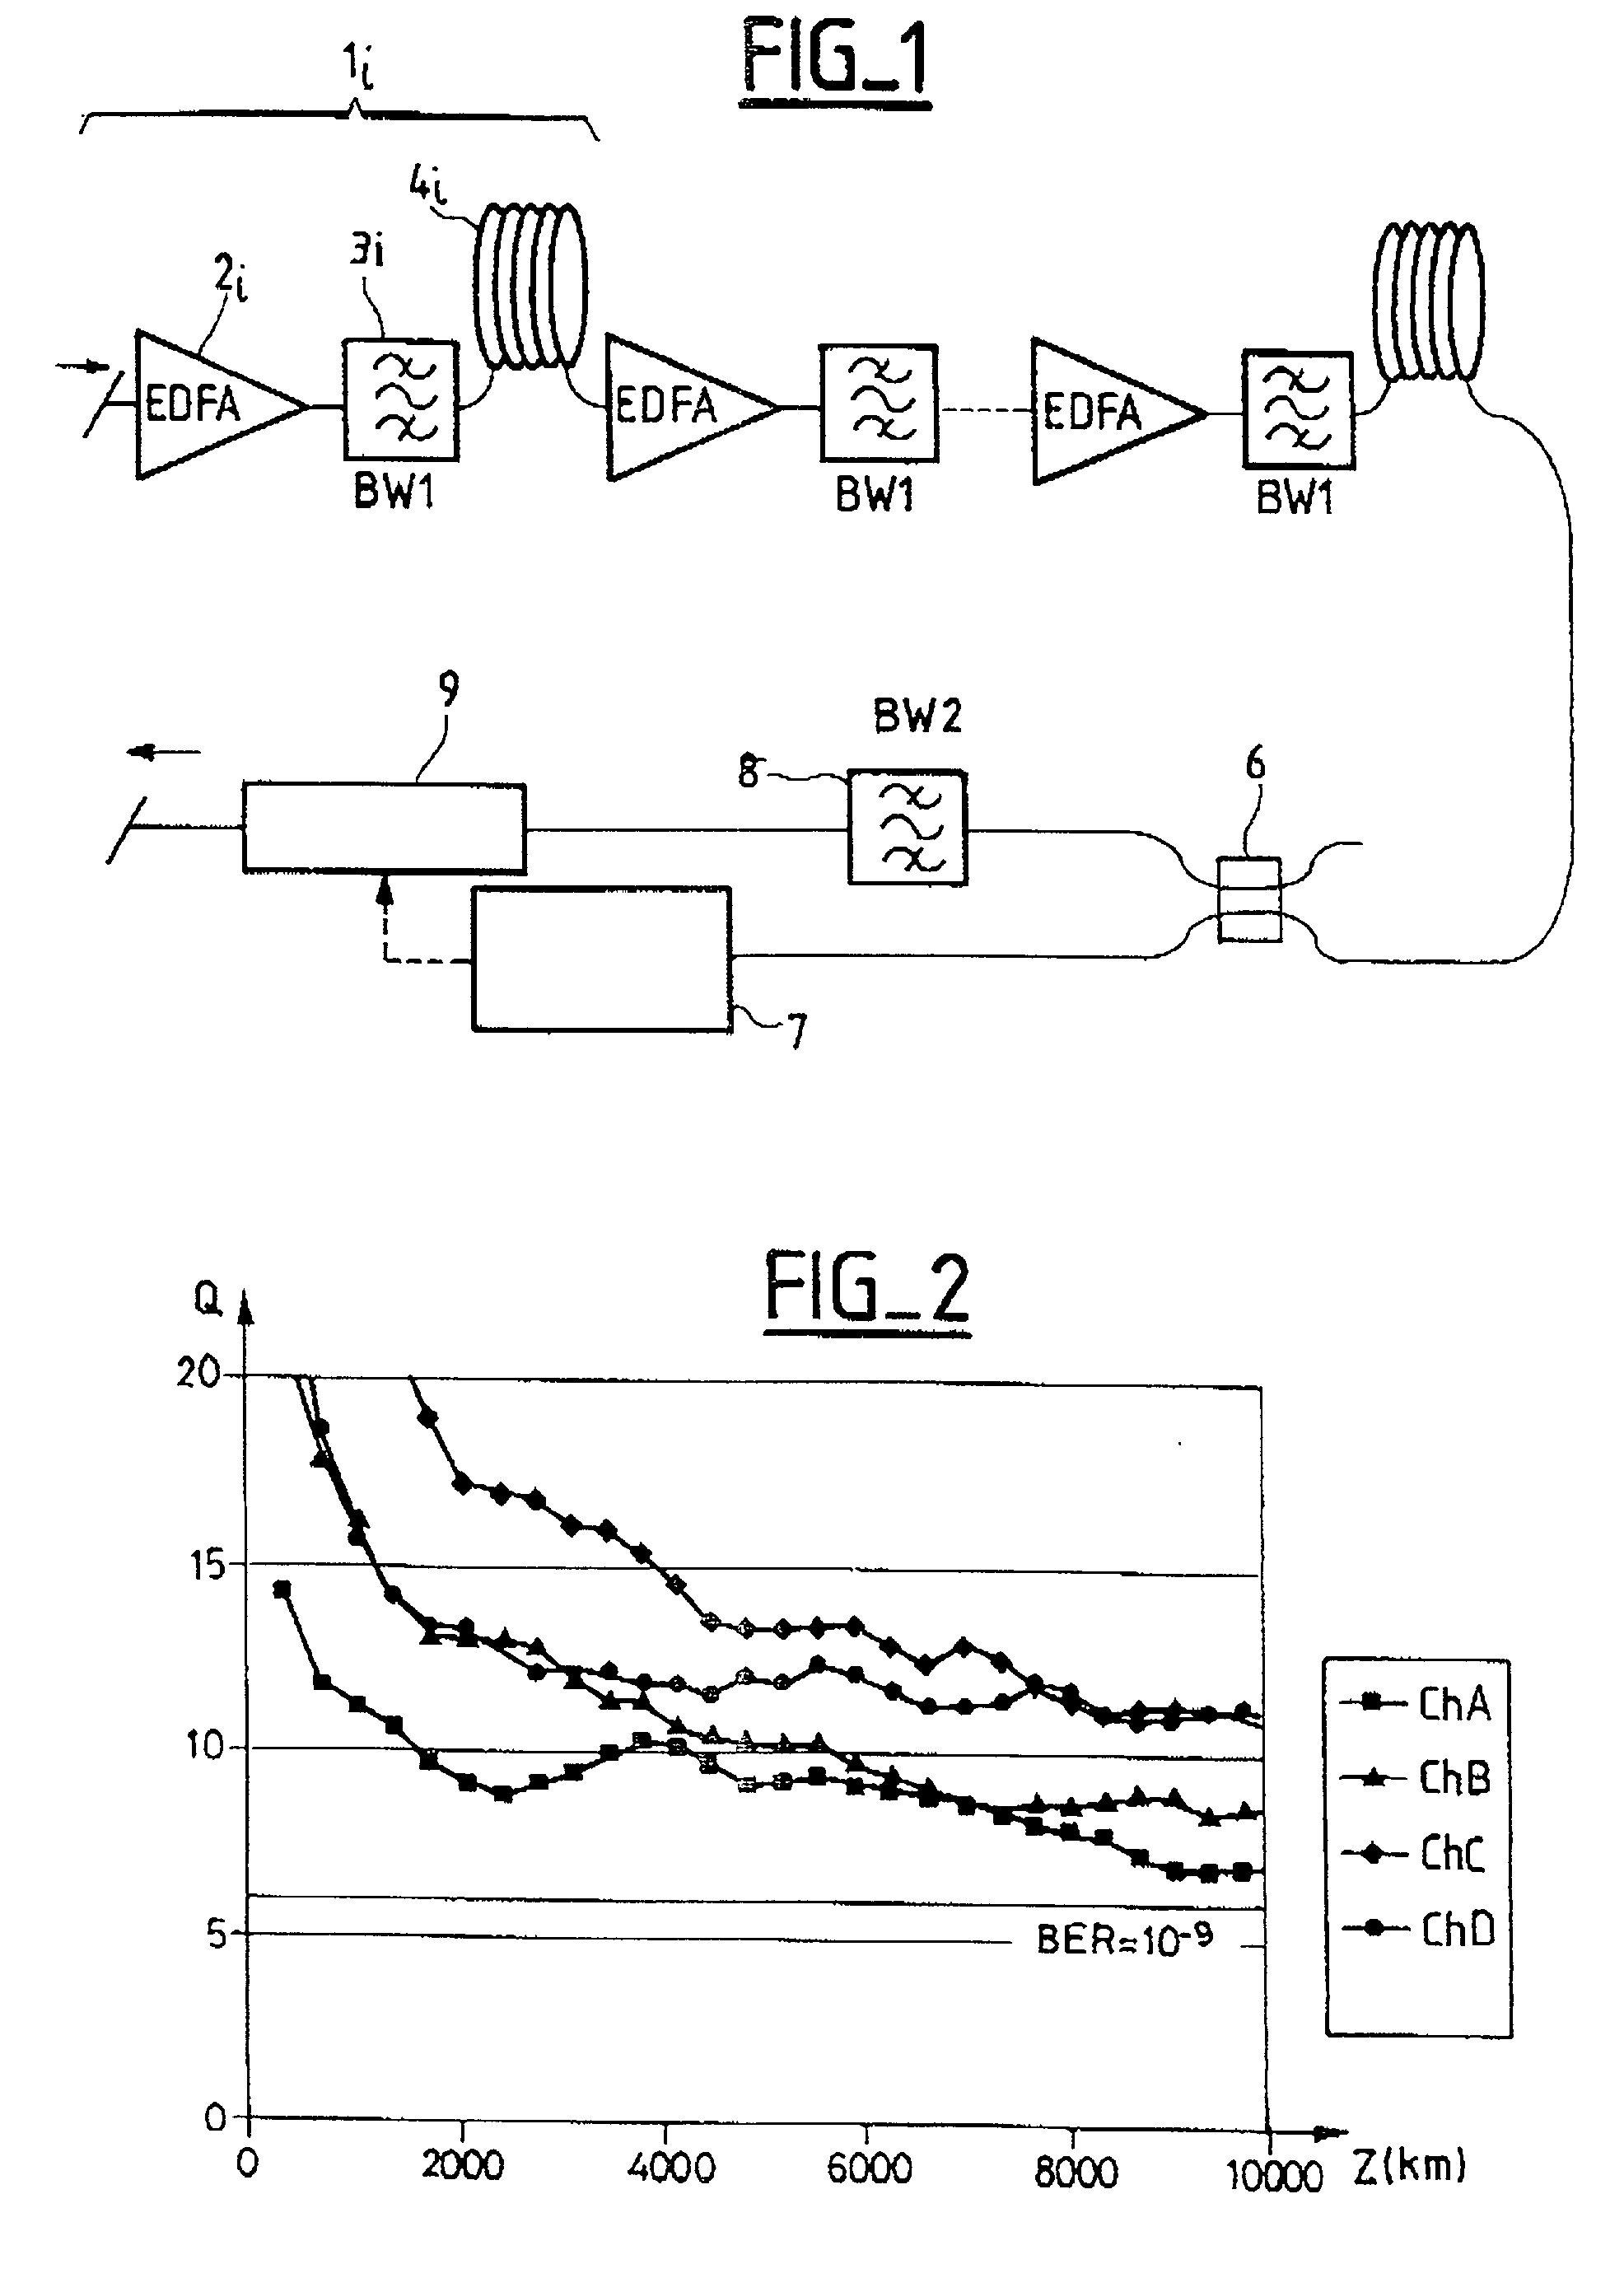 Double filtering fiber optic soliton signal transmission system